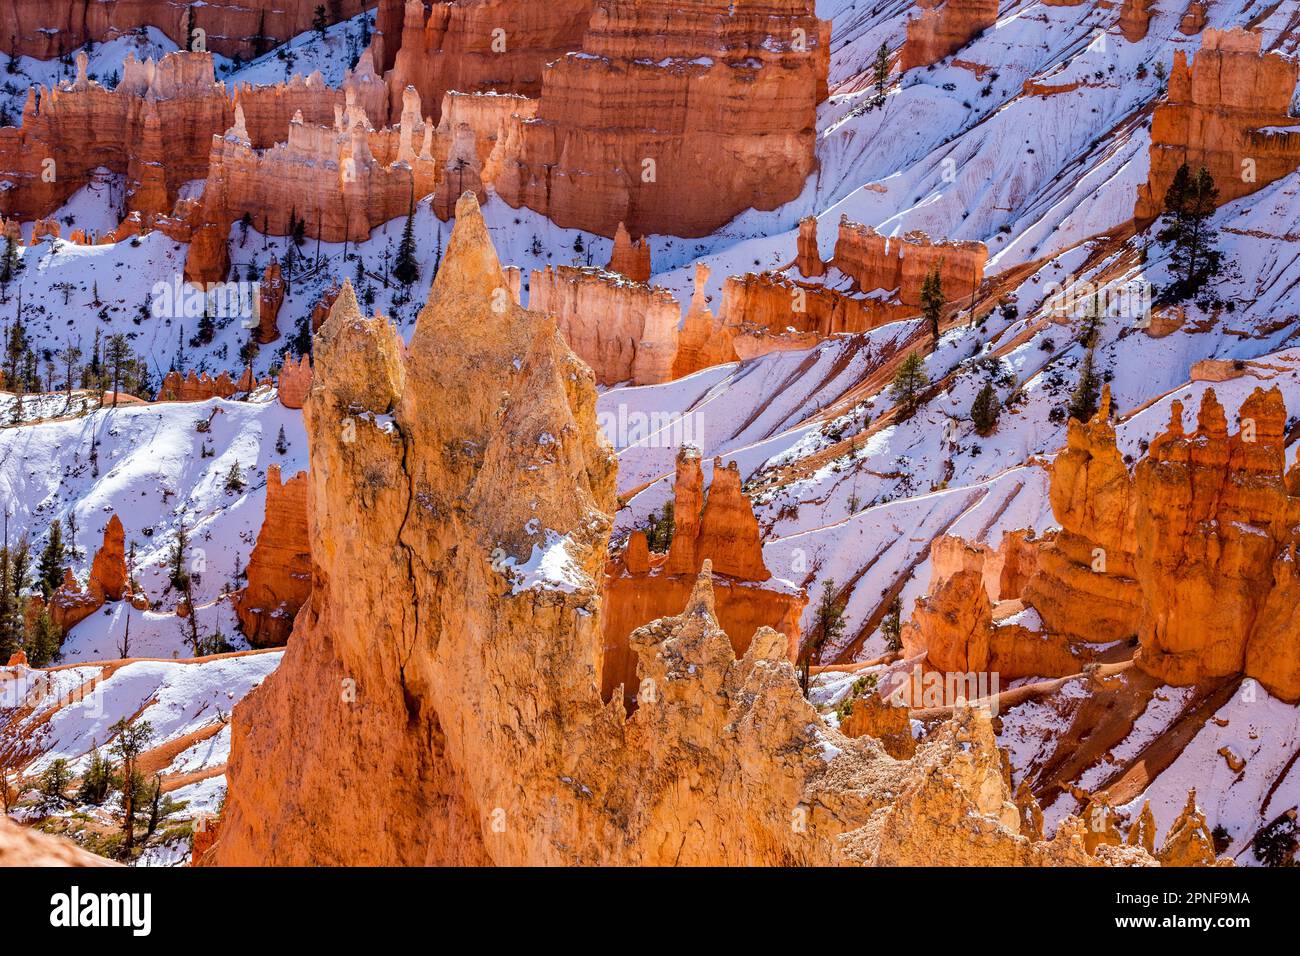 United States, Utah, Bryce Canyon National Park, Hoodoo sandstone rock formations Stock Photo